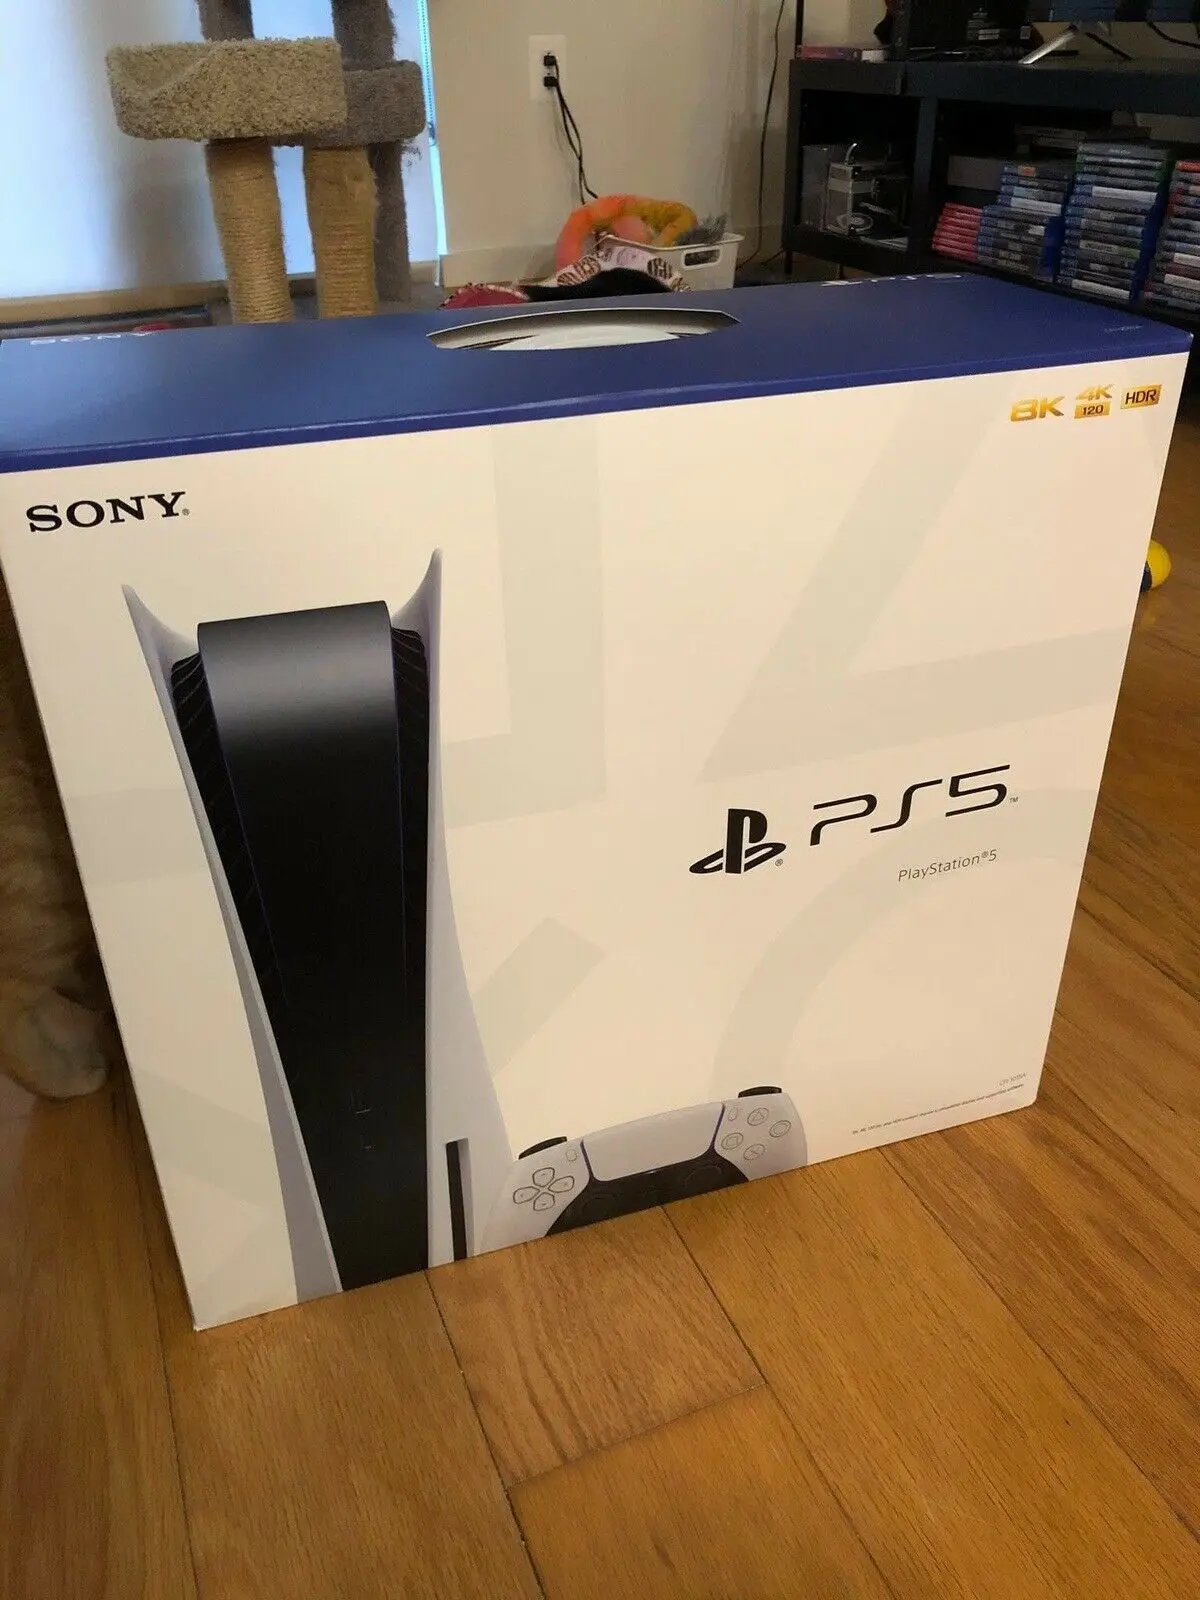 Sony ps5 в коробке